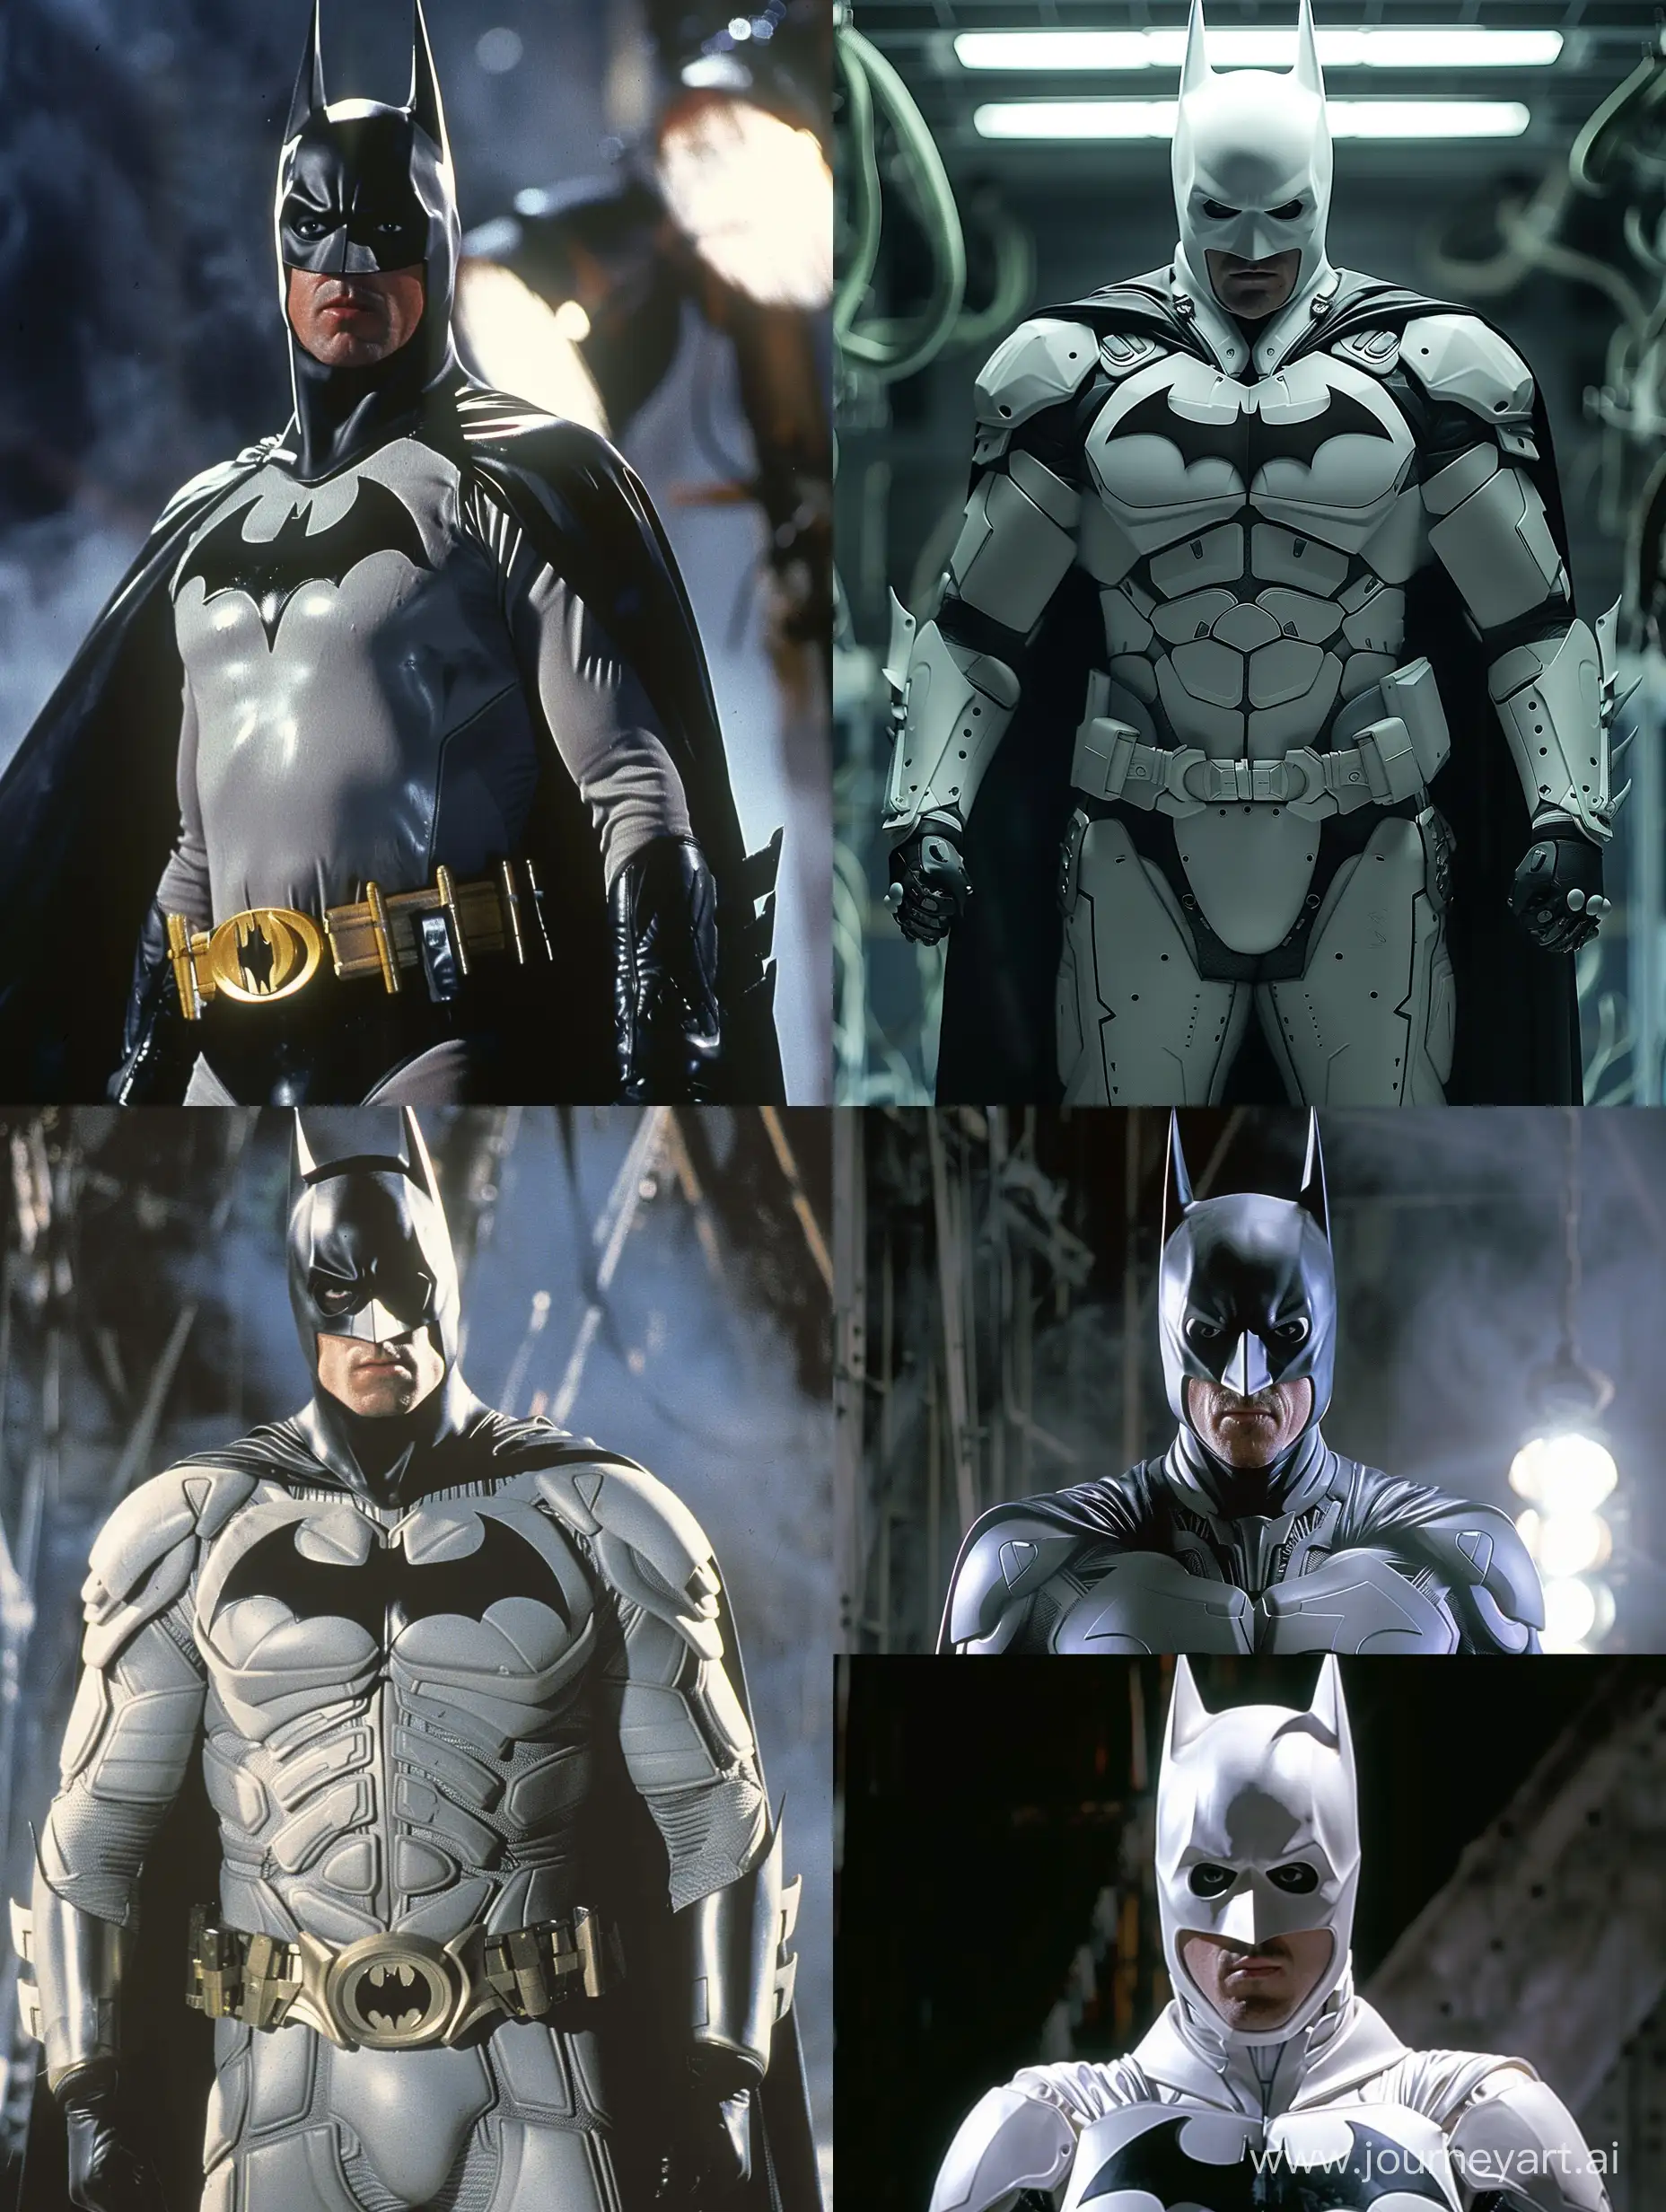 Christian Bale as Batman in White suit 1993s 